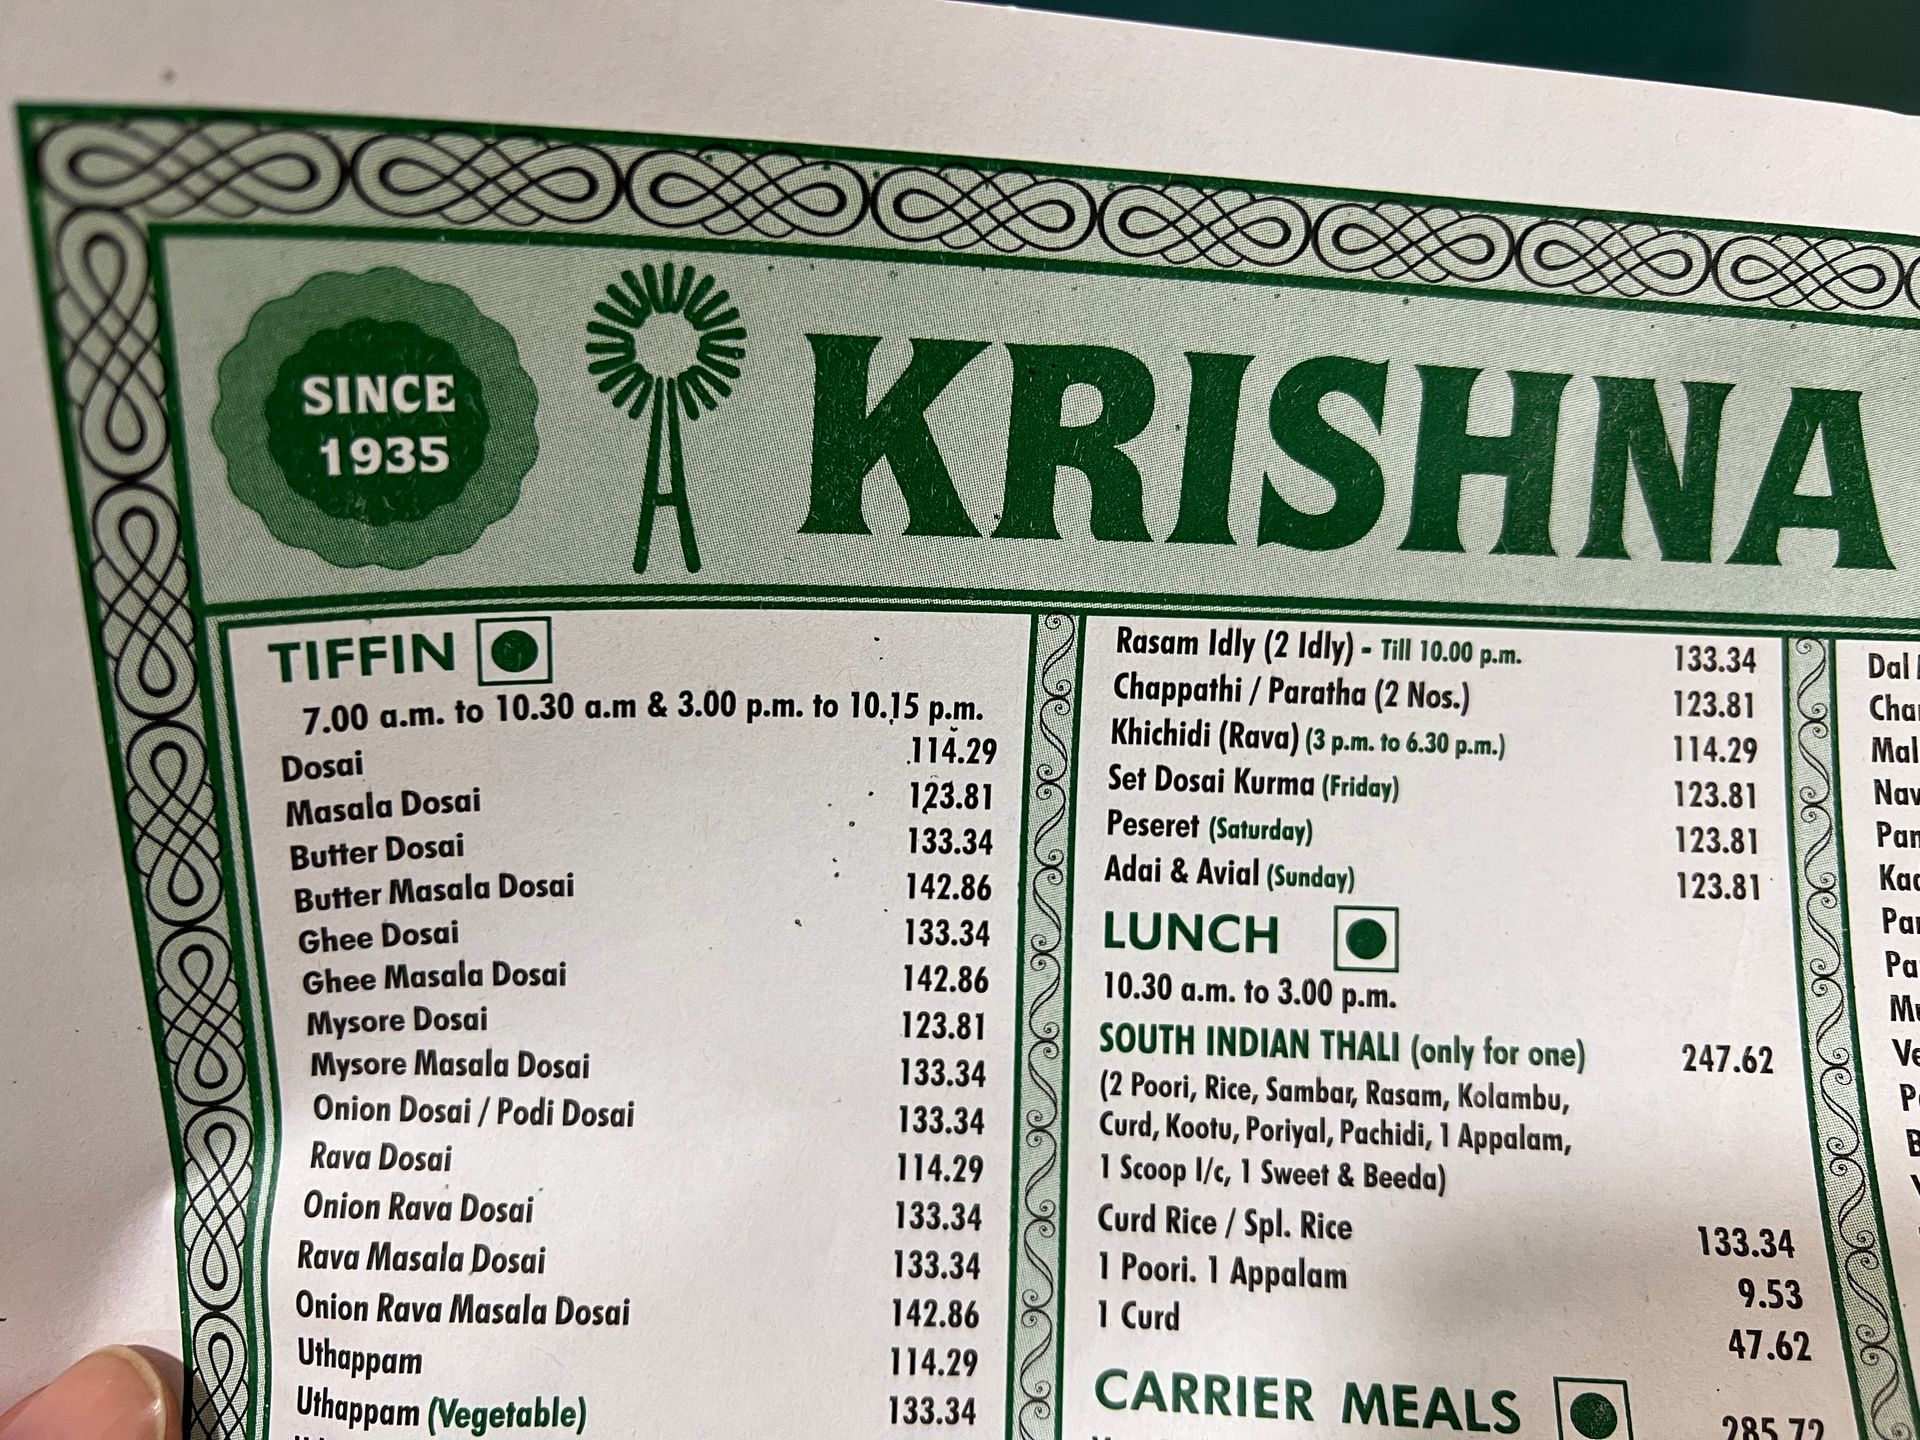 Photo of a restaurant menu in Chennai, India.